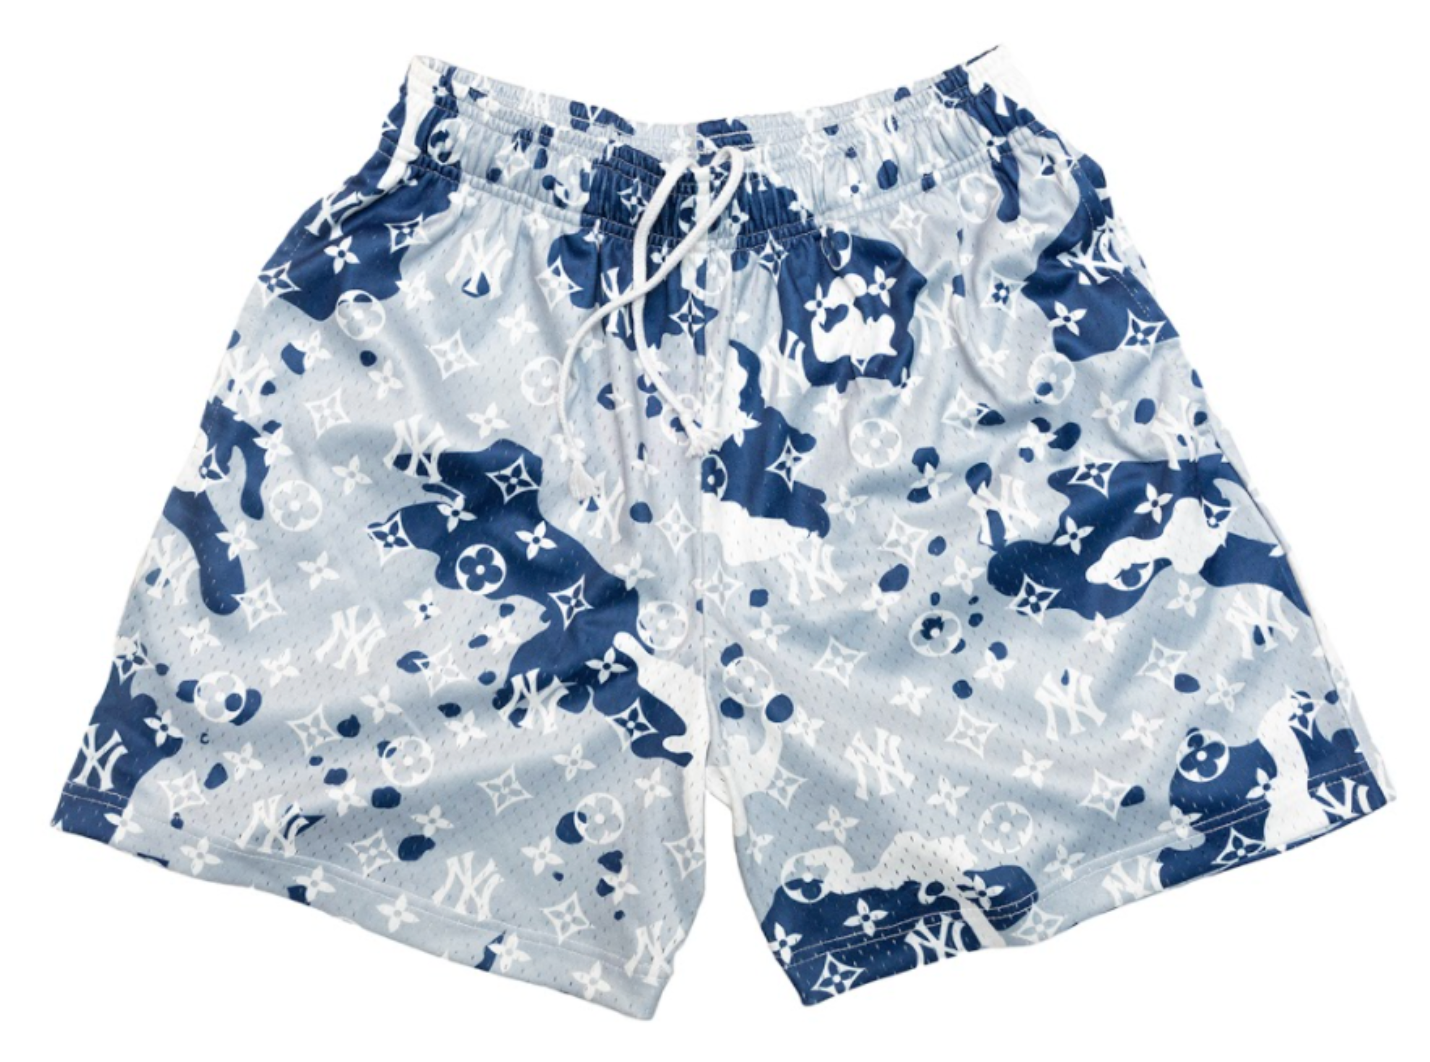 Bravest studios shorts Mens size XS Shorts fit - Depop